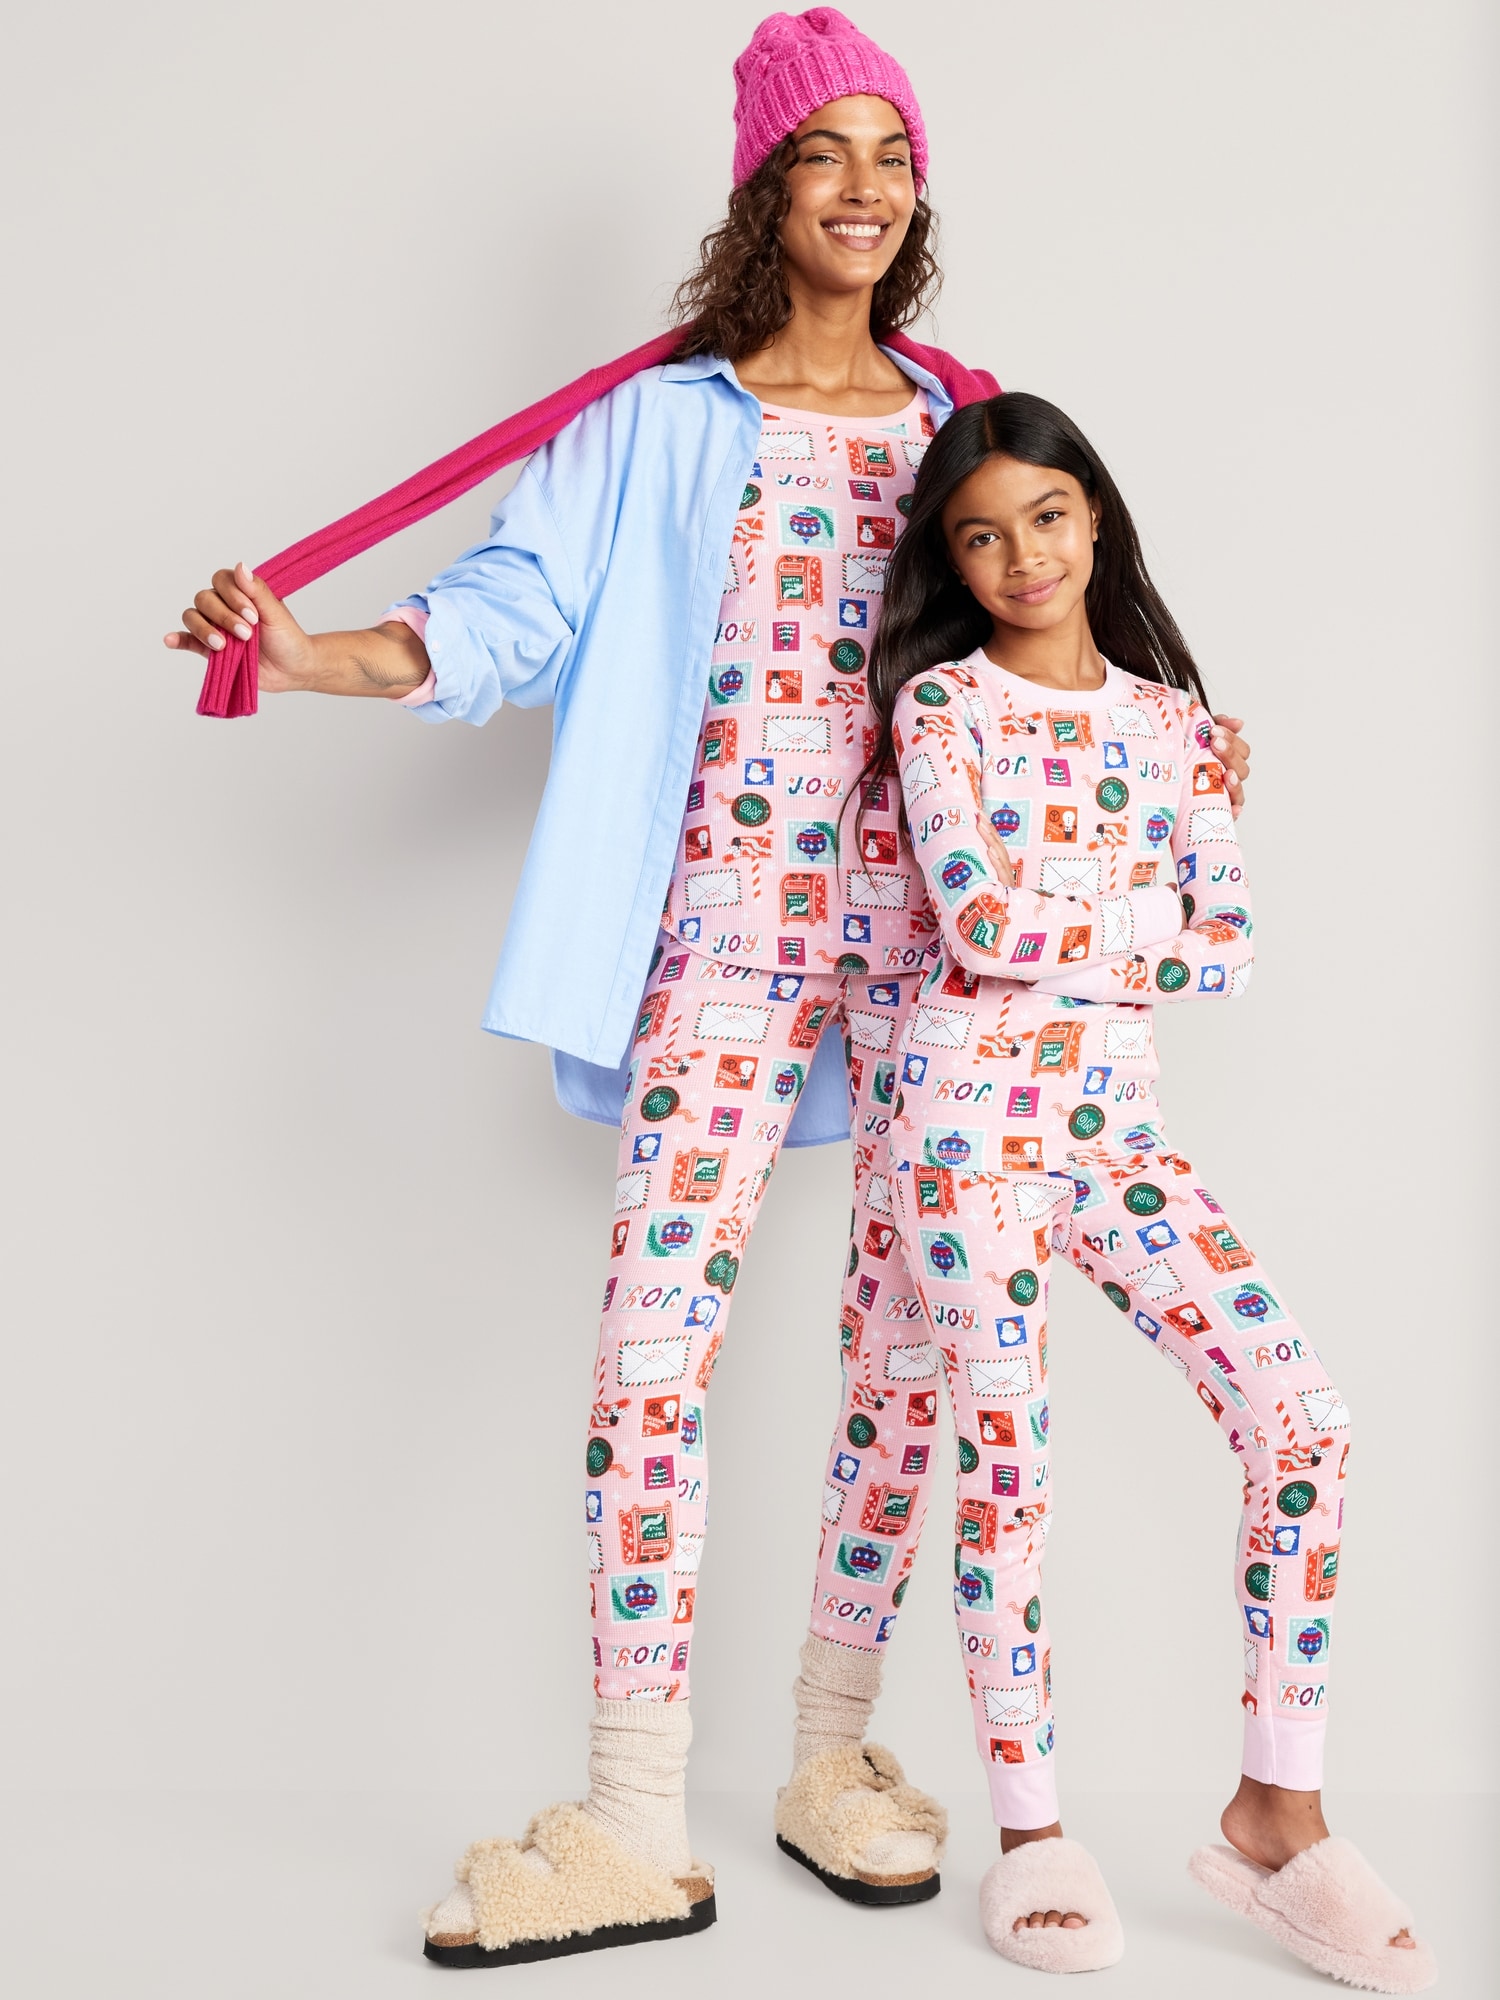 Girls' Pink Snug Fit Pajamas Westyn Baby: The Softest Toddler Pajamas